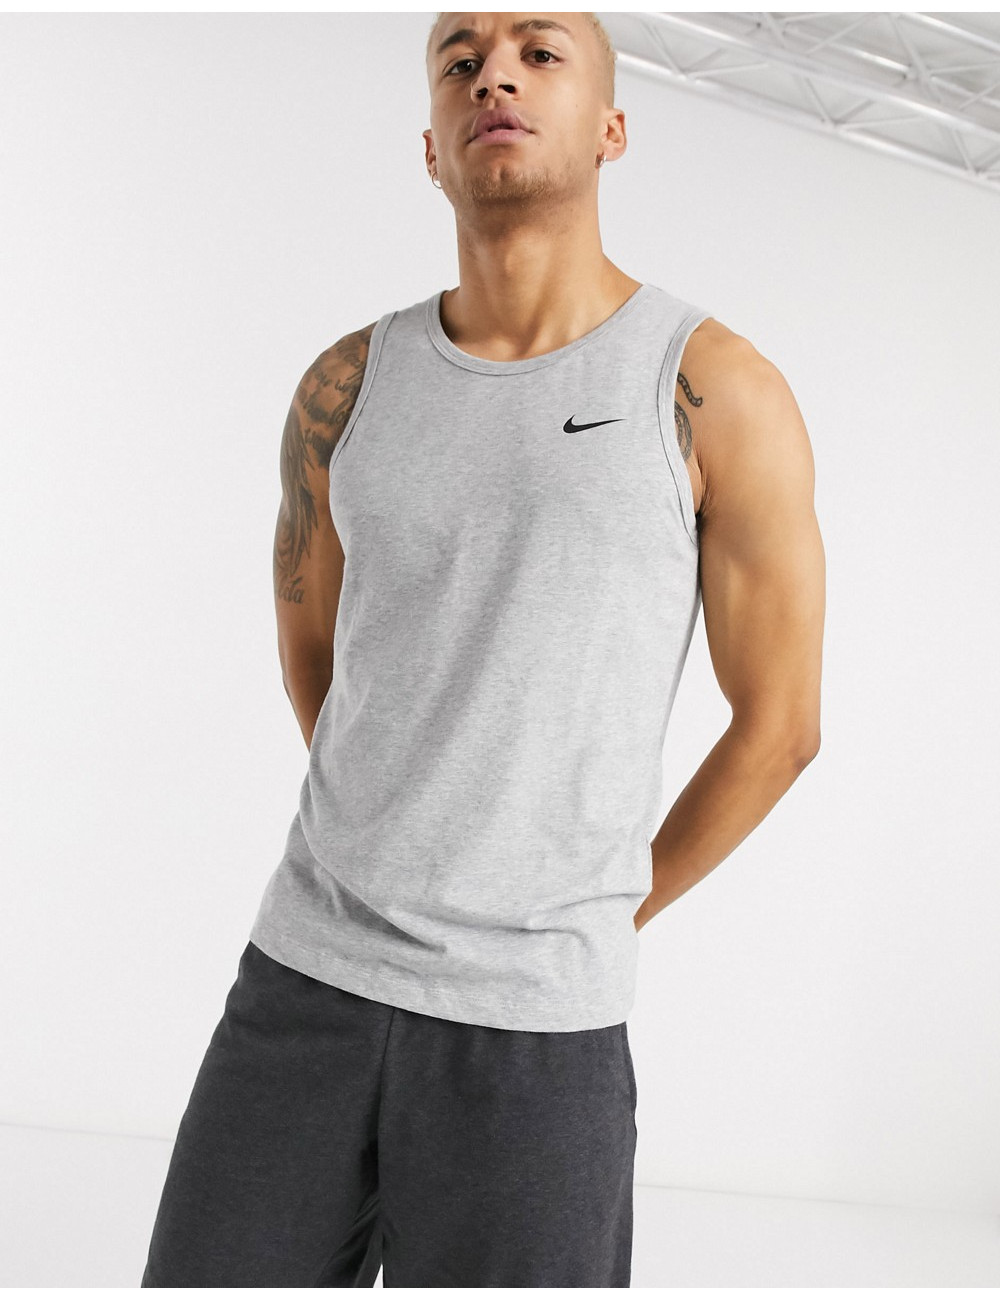 Nike Training dry tank in grey